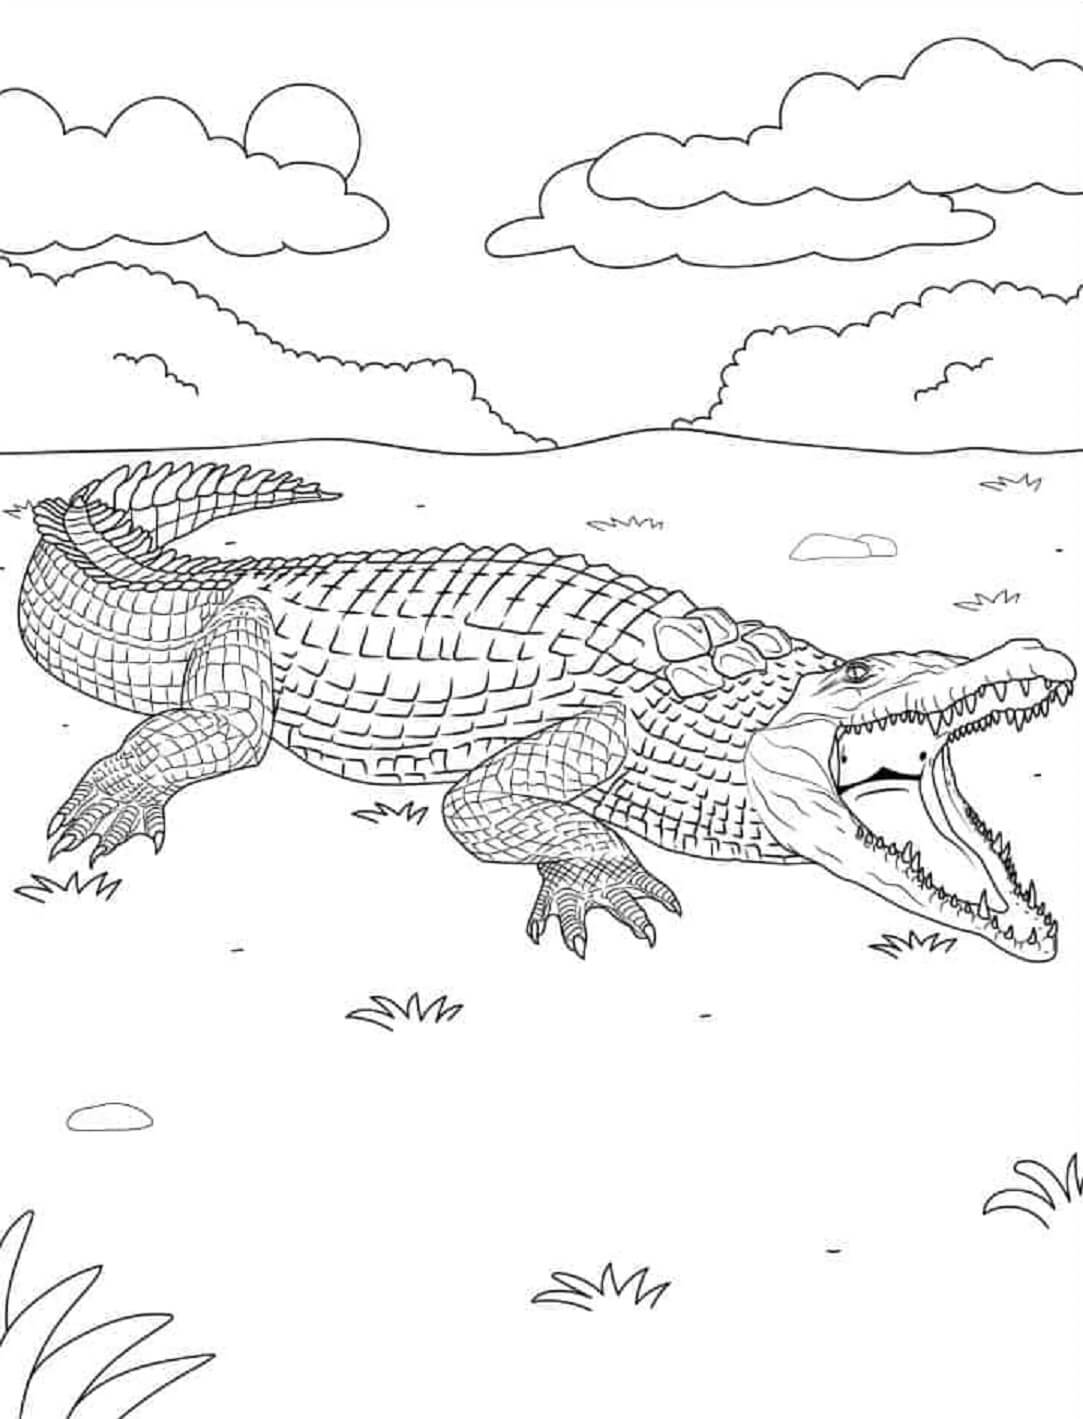 Crocodile mandala coloring pages